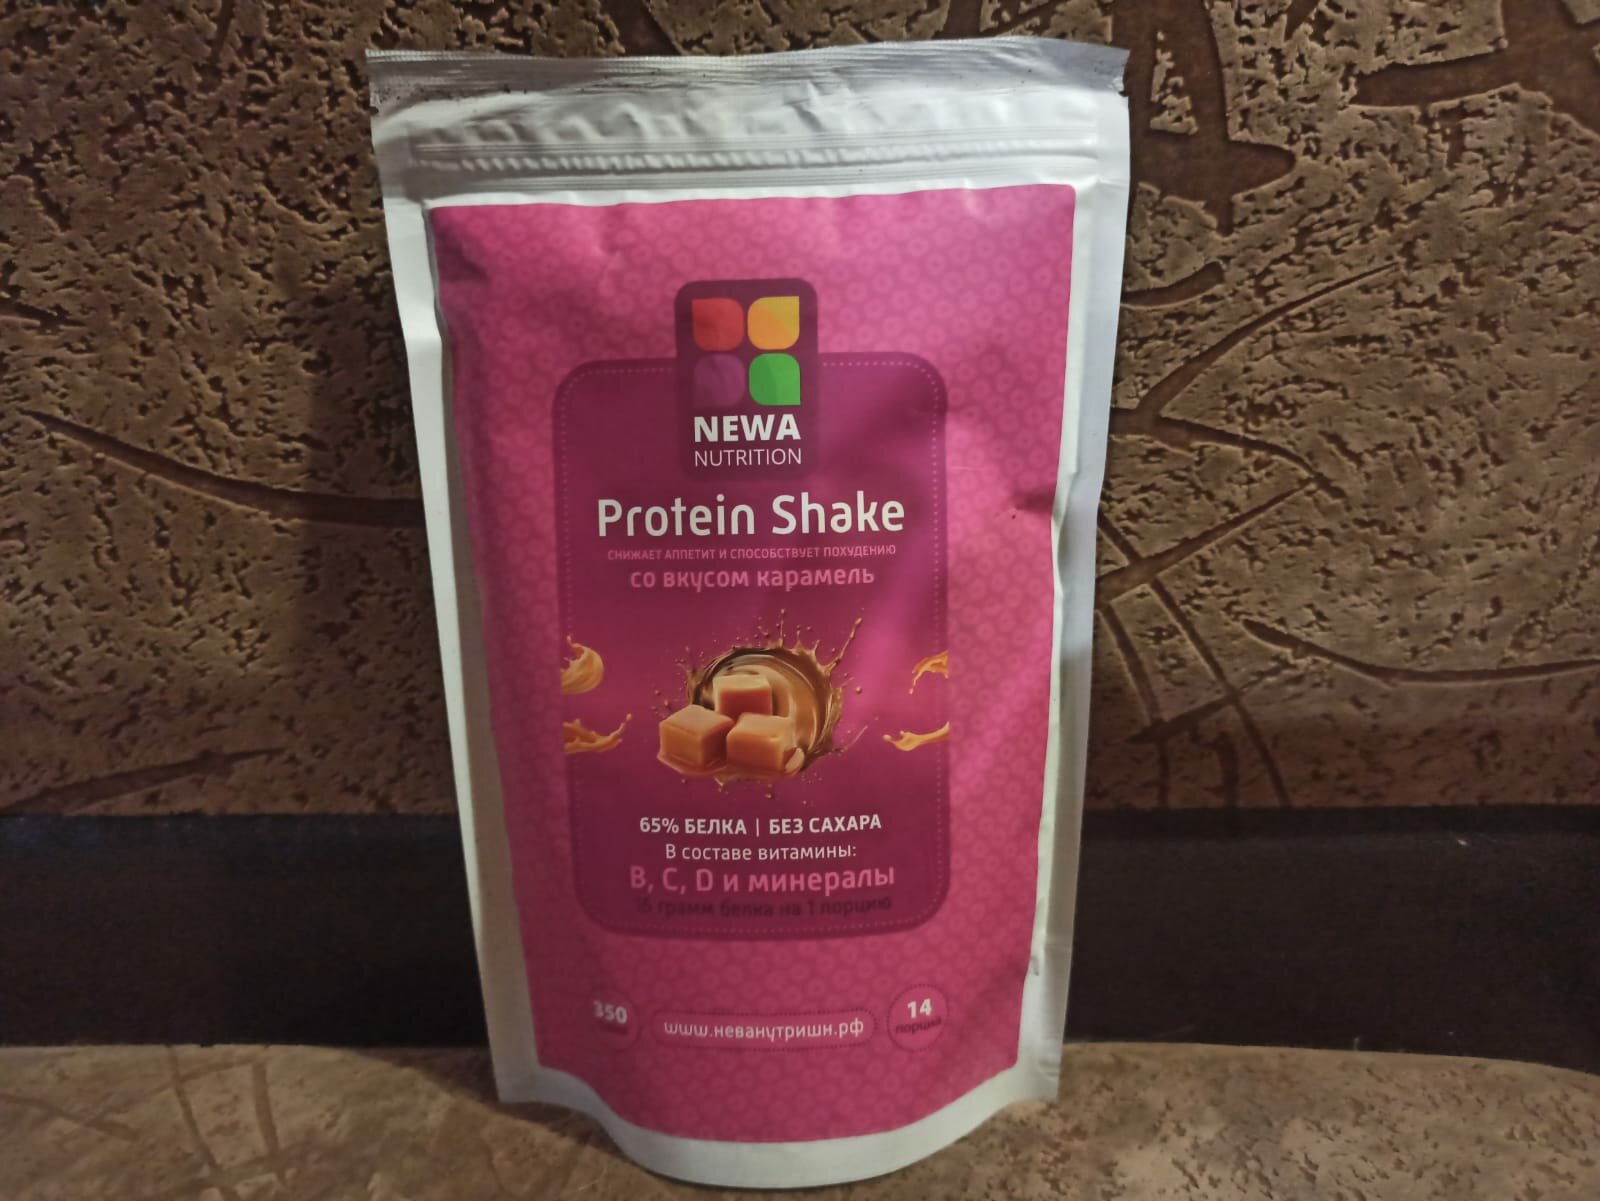 Протеин сывороточный "Изолят без сахара" 350 г со вкусом карамели